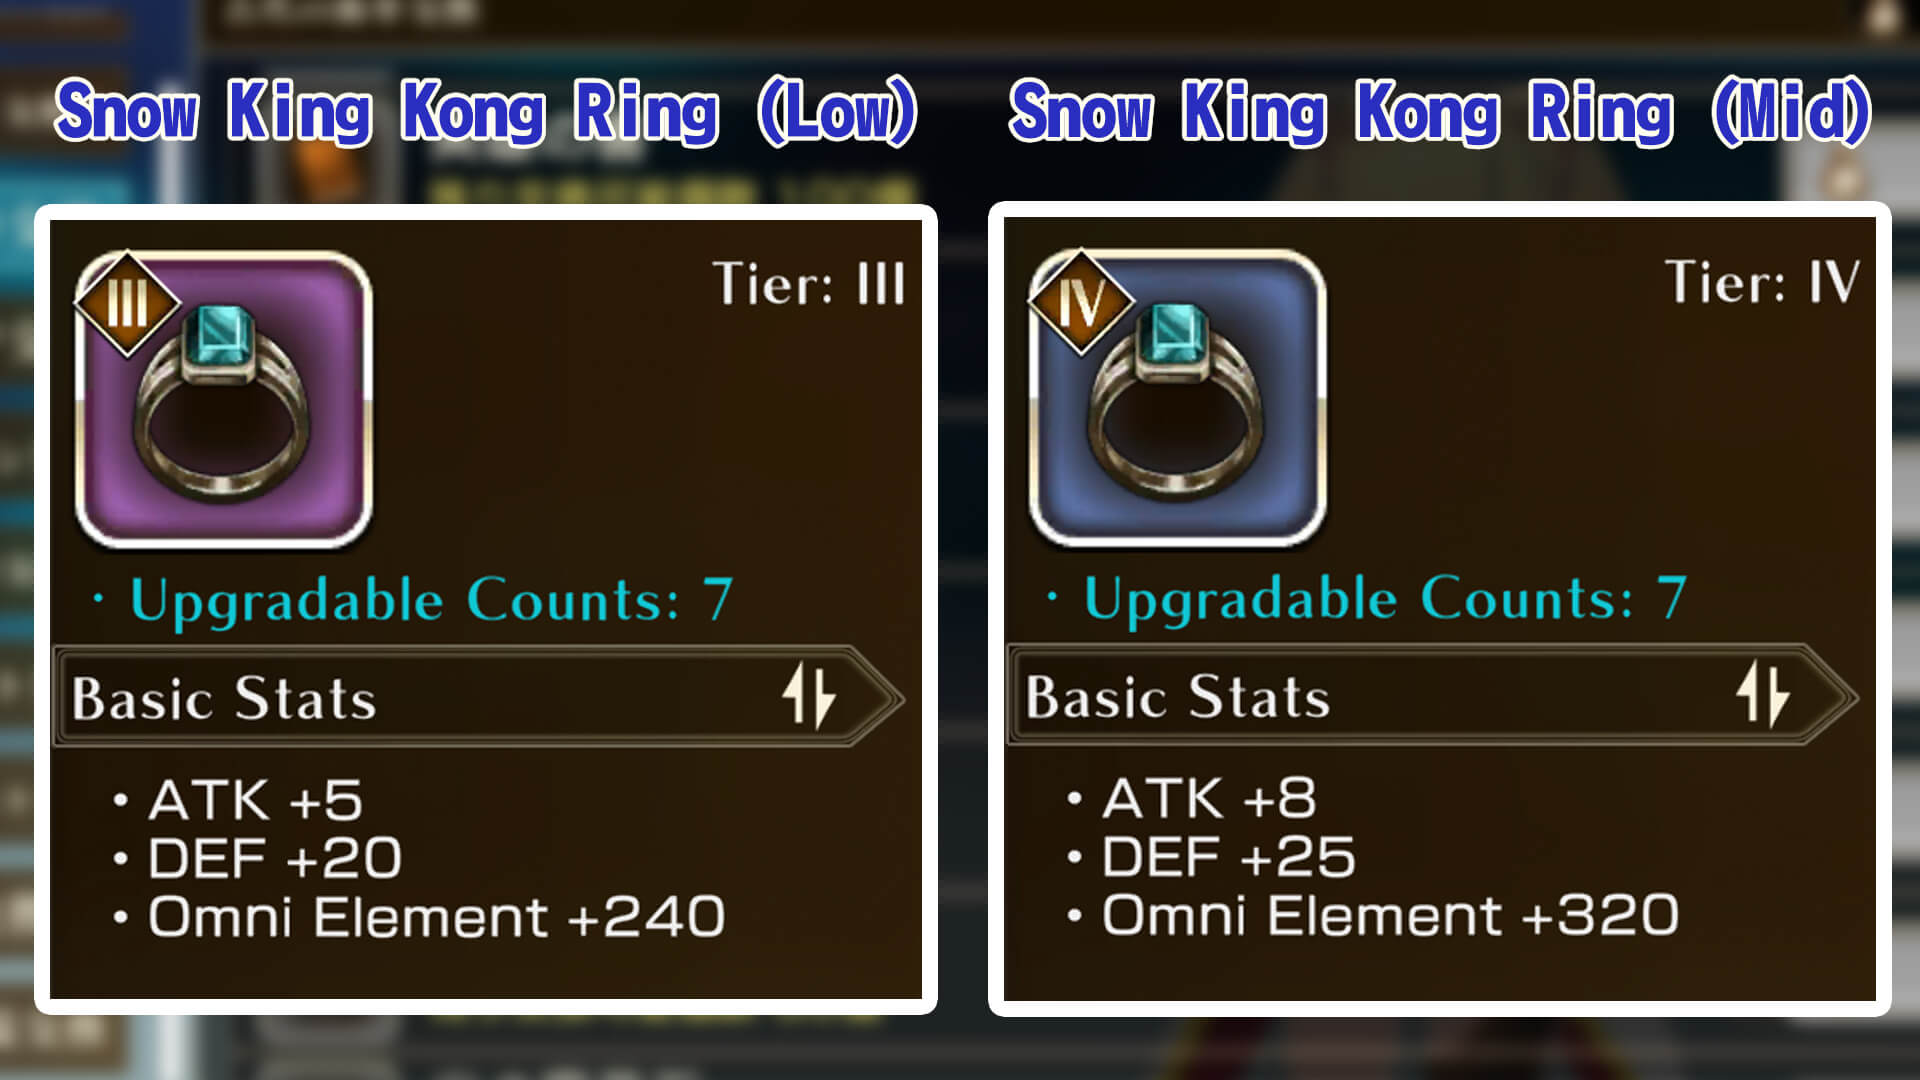 Snow King Kong Ring